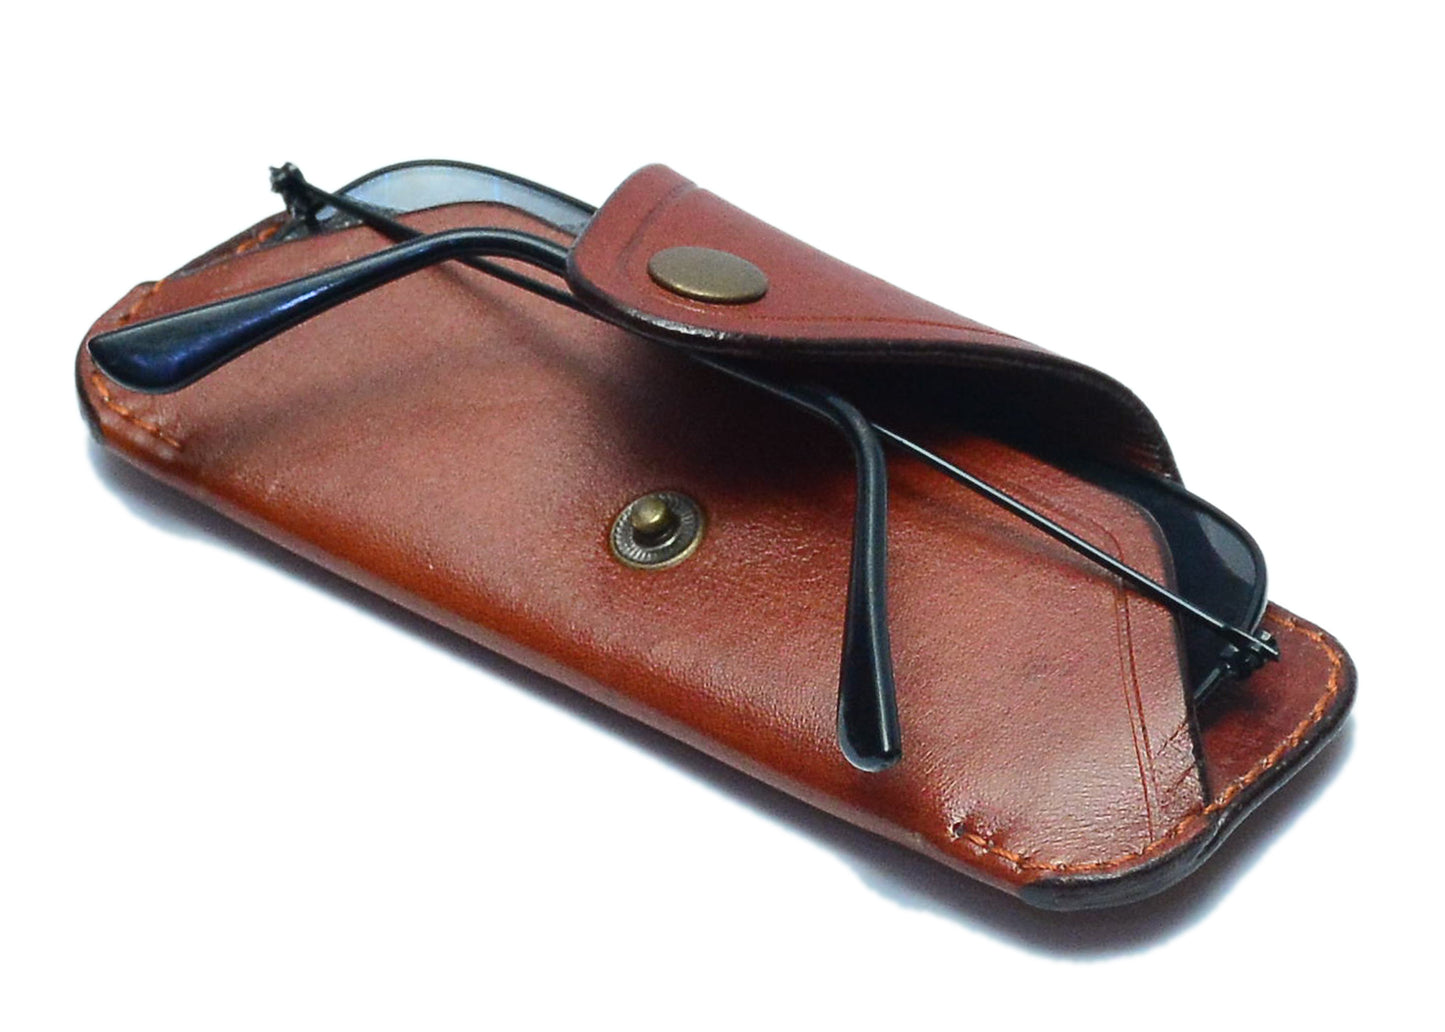 SleekStyle Leather Wallet